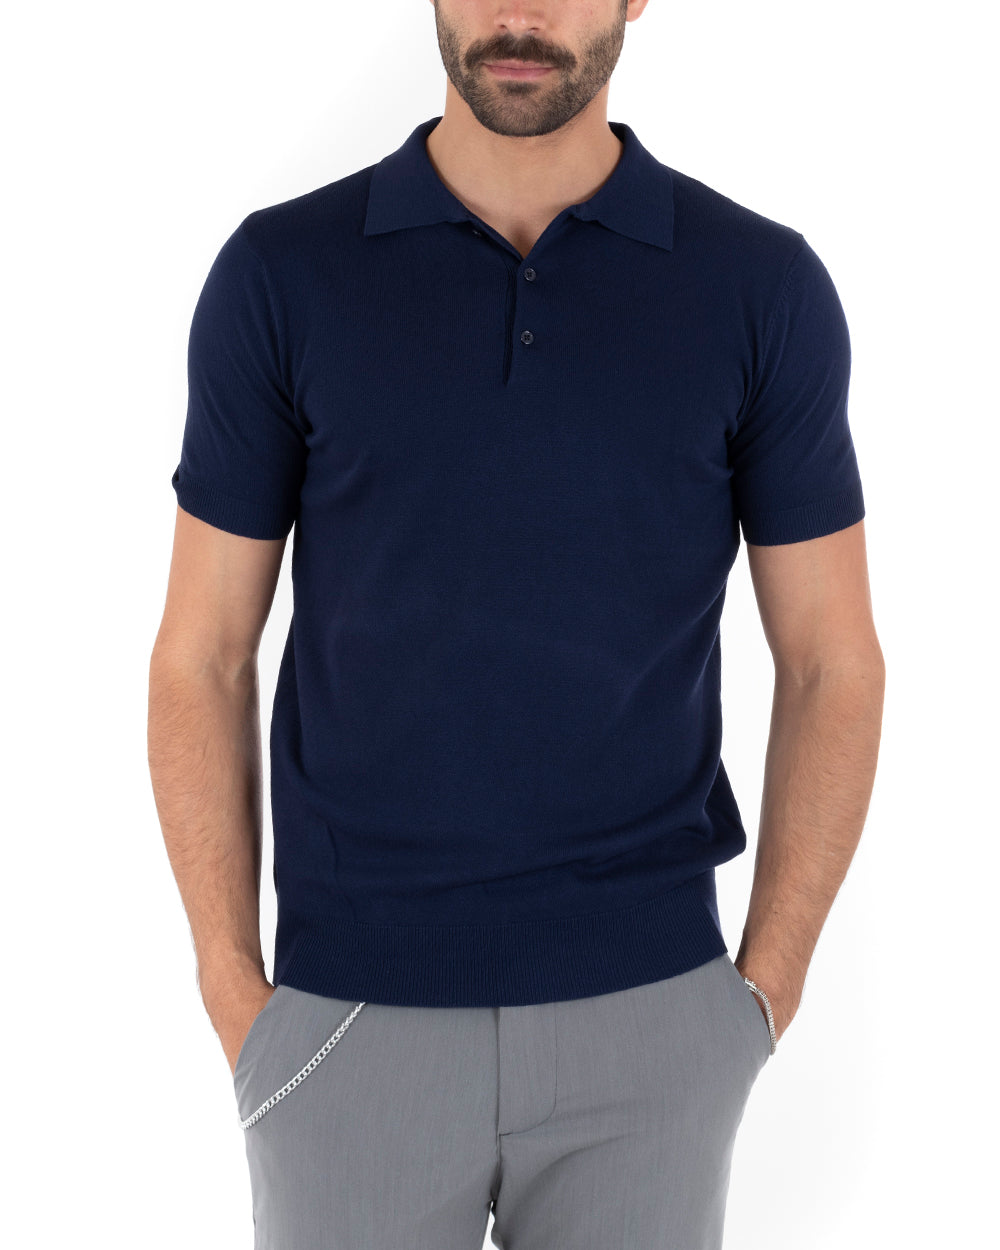 Polo T-Shirt Uomo Manica Corta Tinta Unita Blu Filo Casual GIOSAL-TS2629A